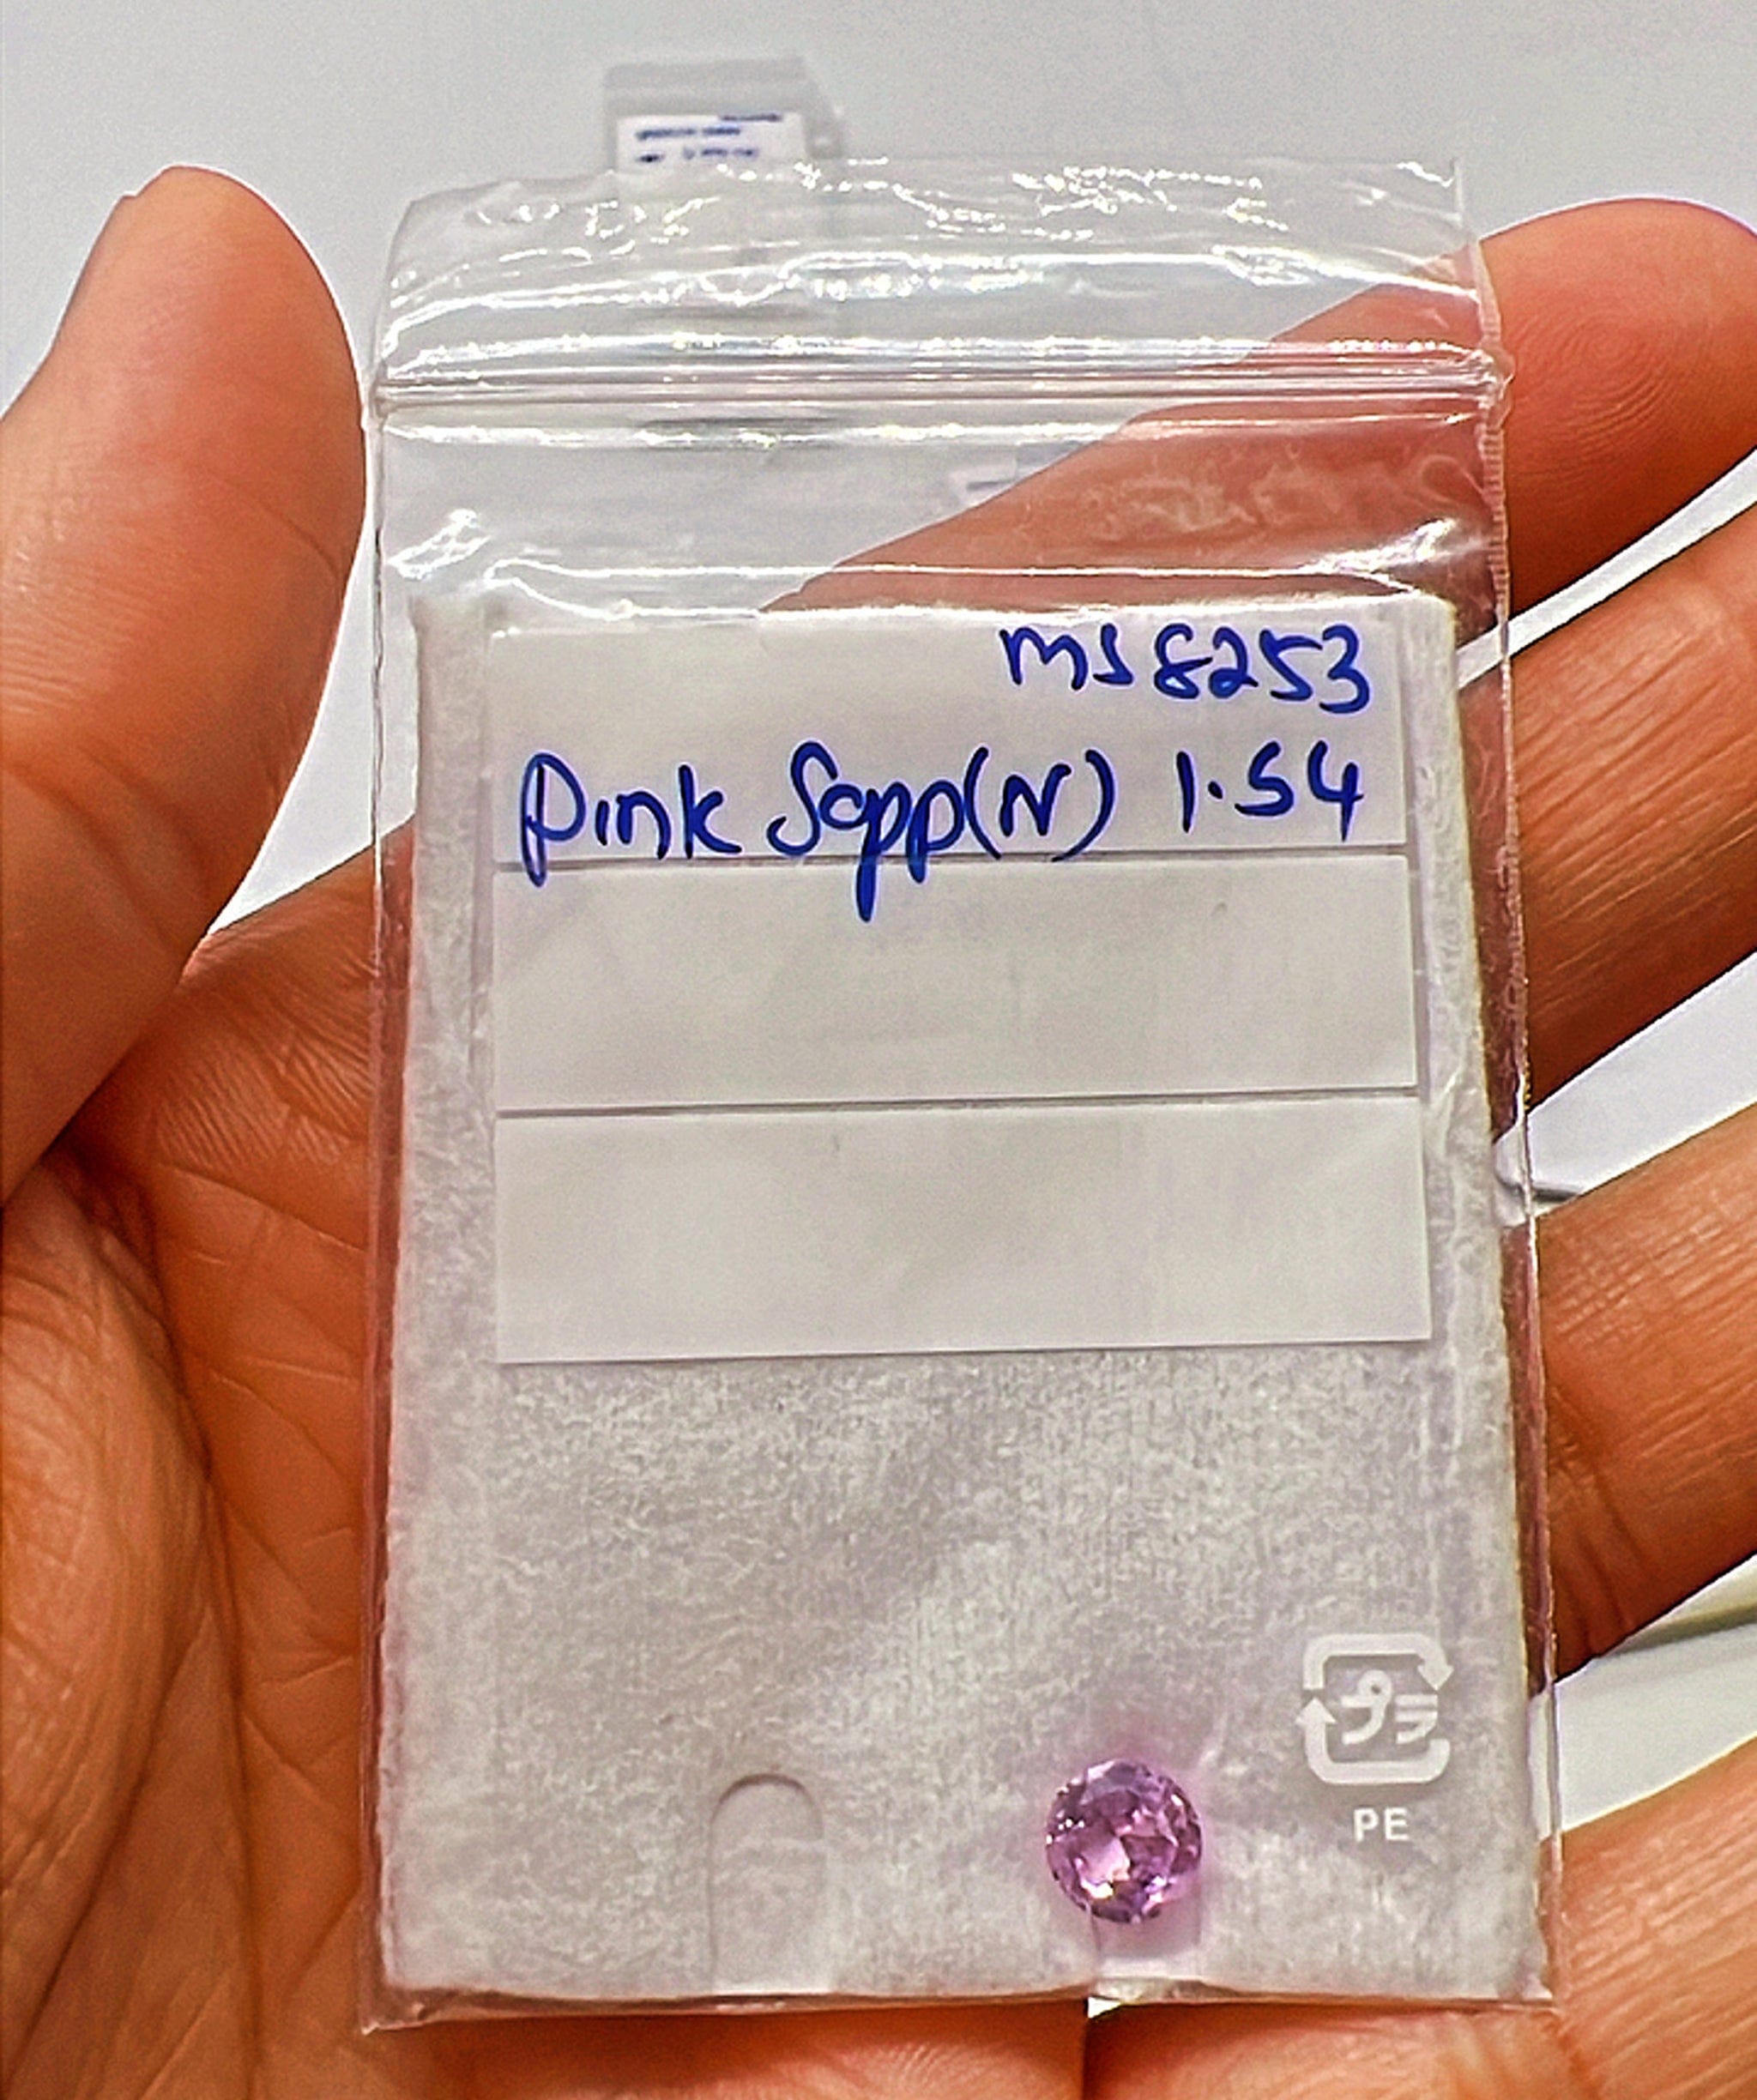 Luxury Promise Pink Sapphire (N) 1.54 MS 8253